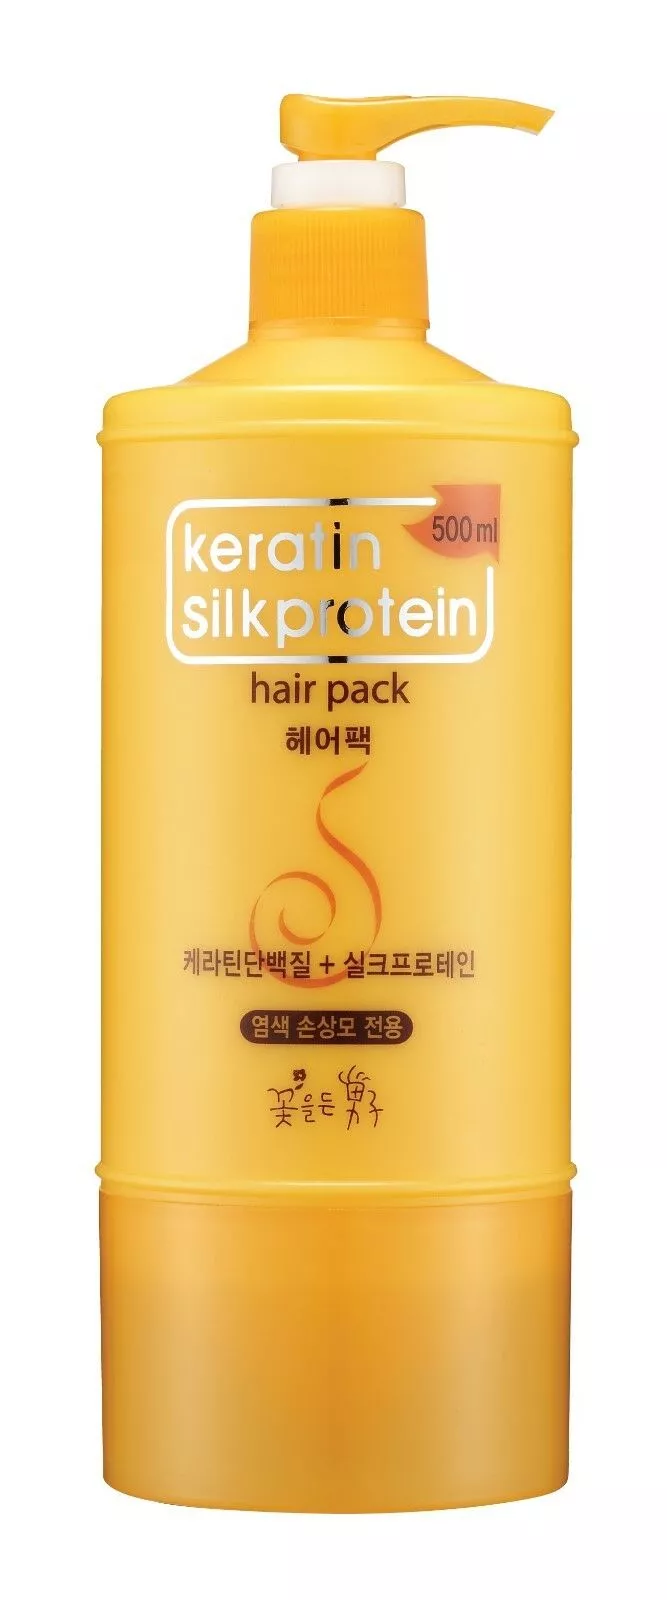 Keratin Silkprotein Hair Pack в интернет-магазине Skinly